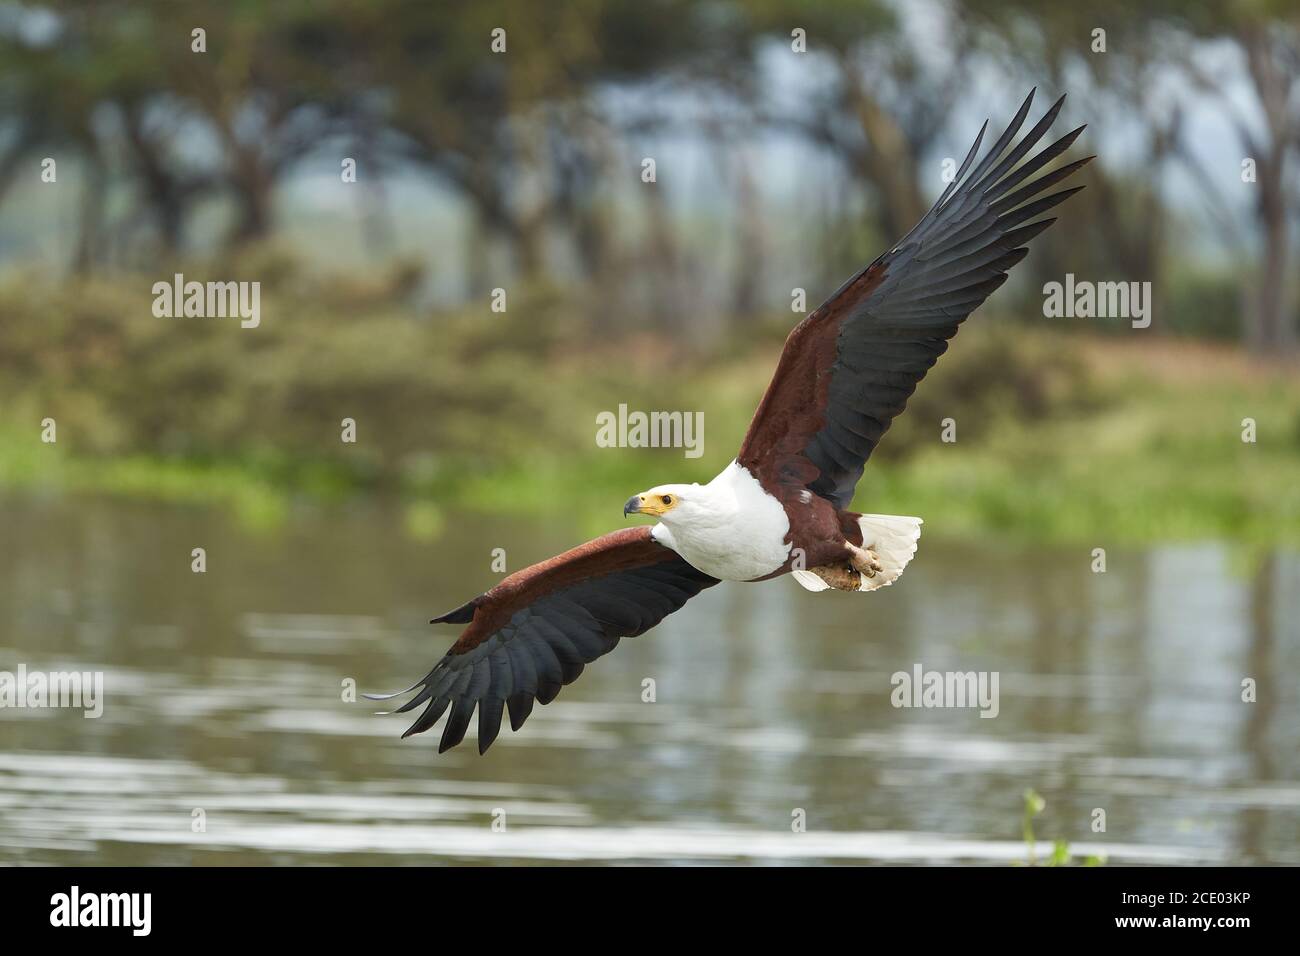 African Fish Sea Eagle Catching Fish Lake Hunting Haliaeetus vocifer Stock Photo